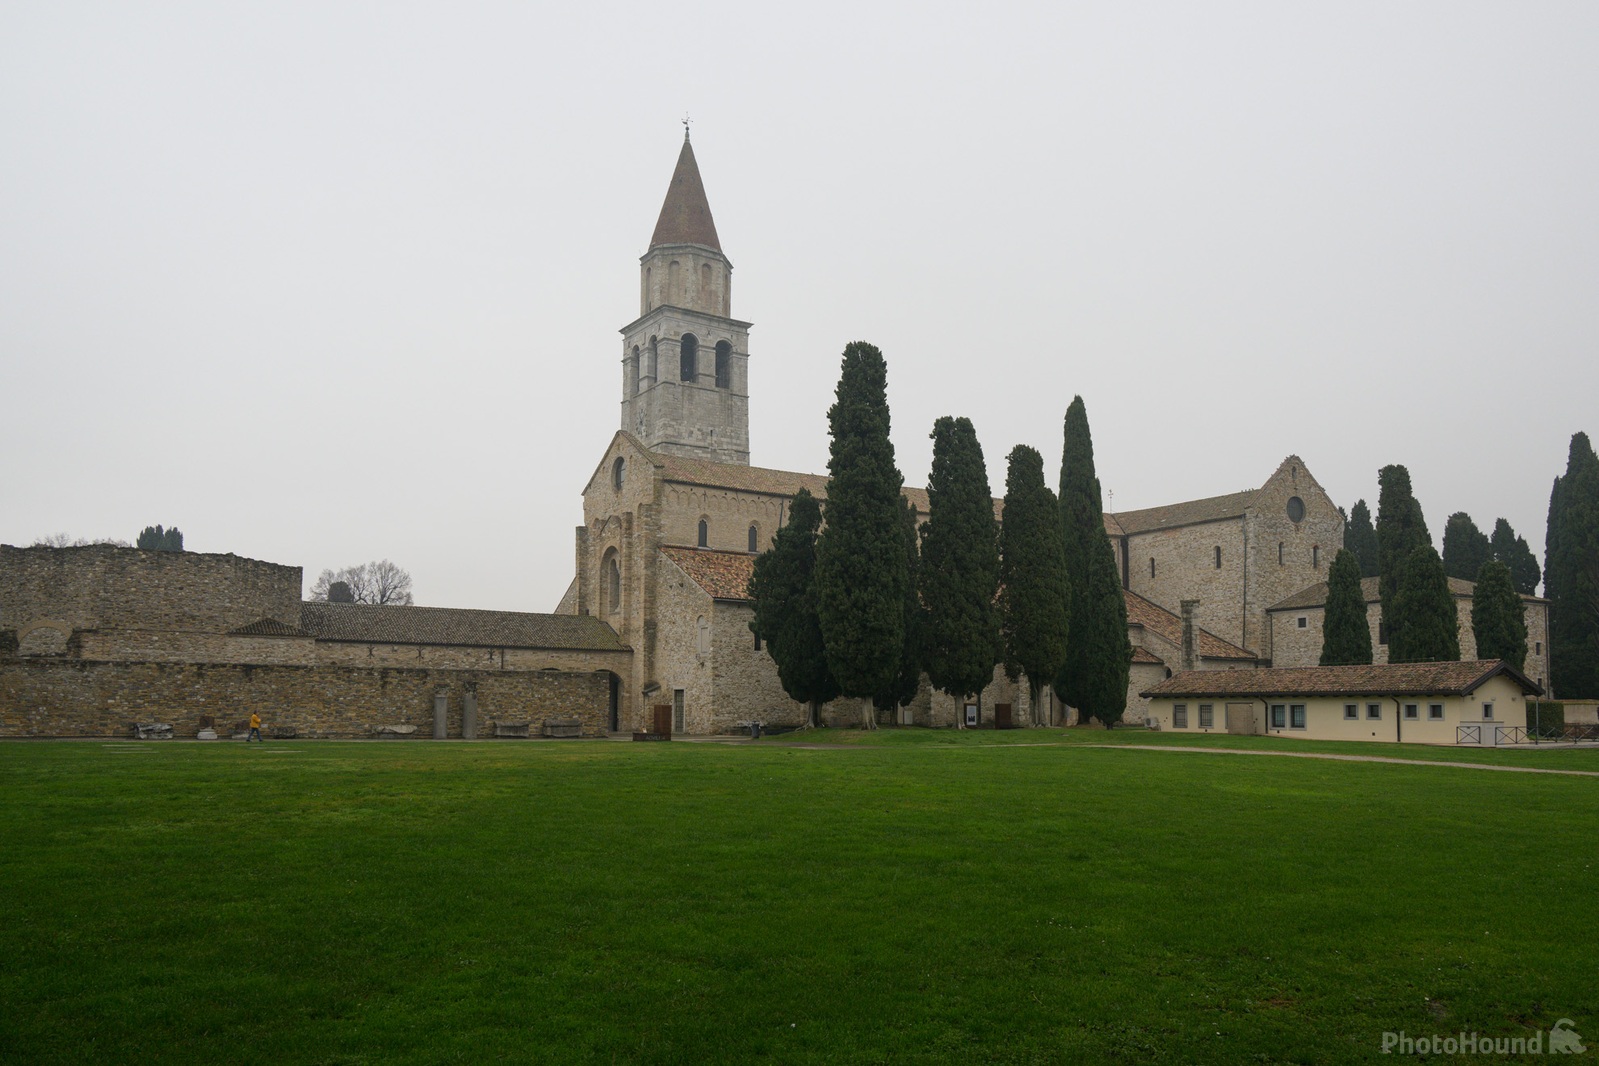 Image of Basilica di Santa Maria Assunta by Luka Esenko